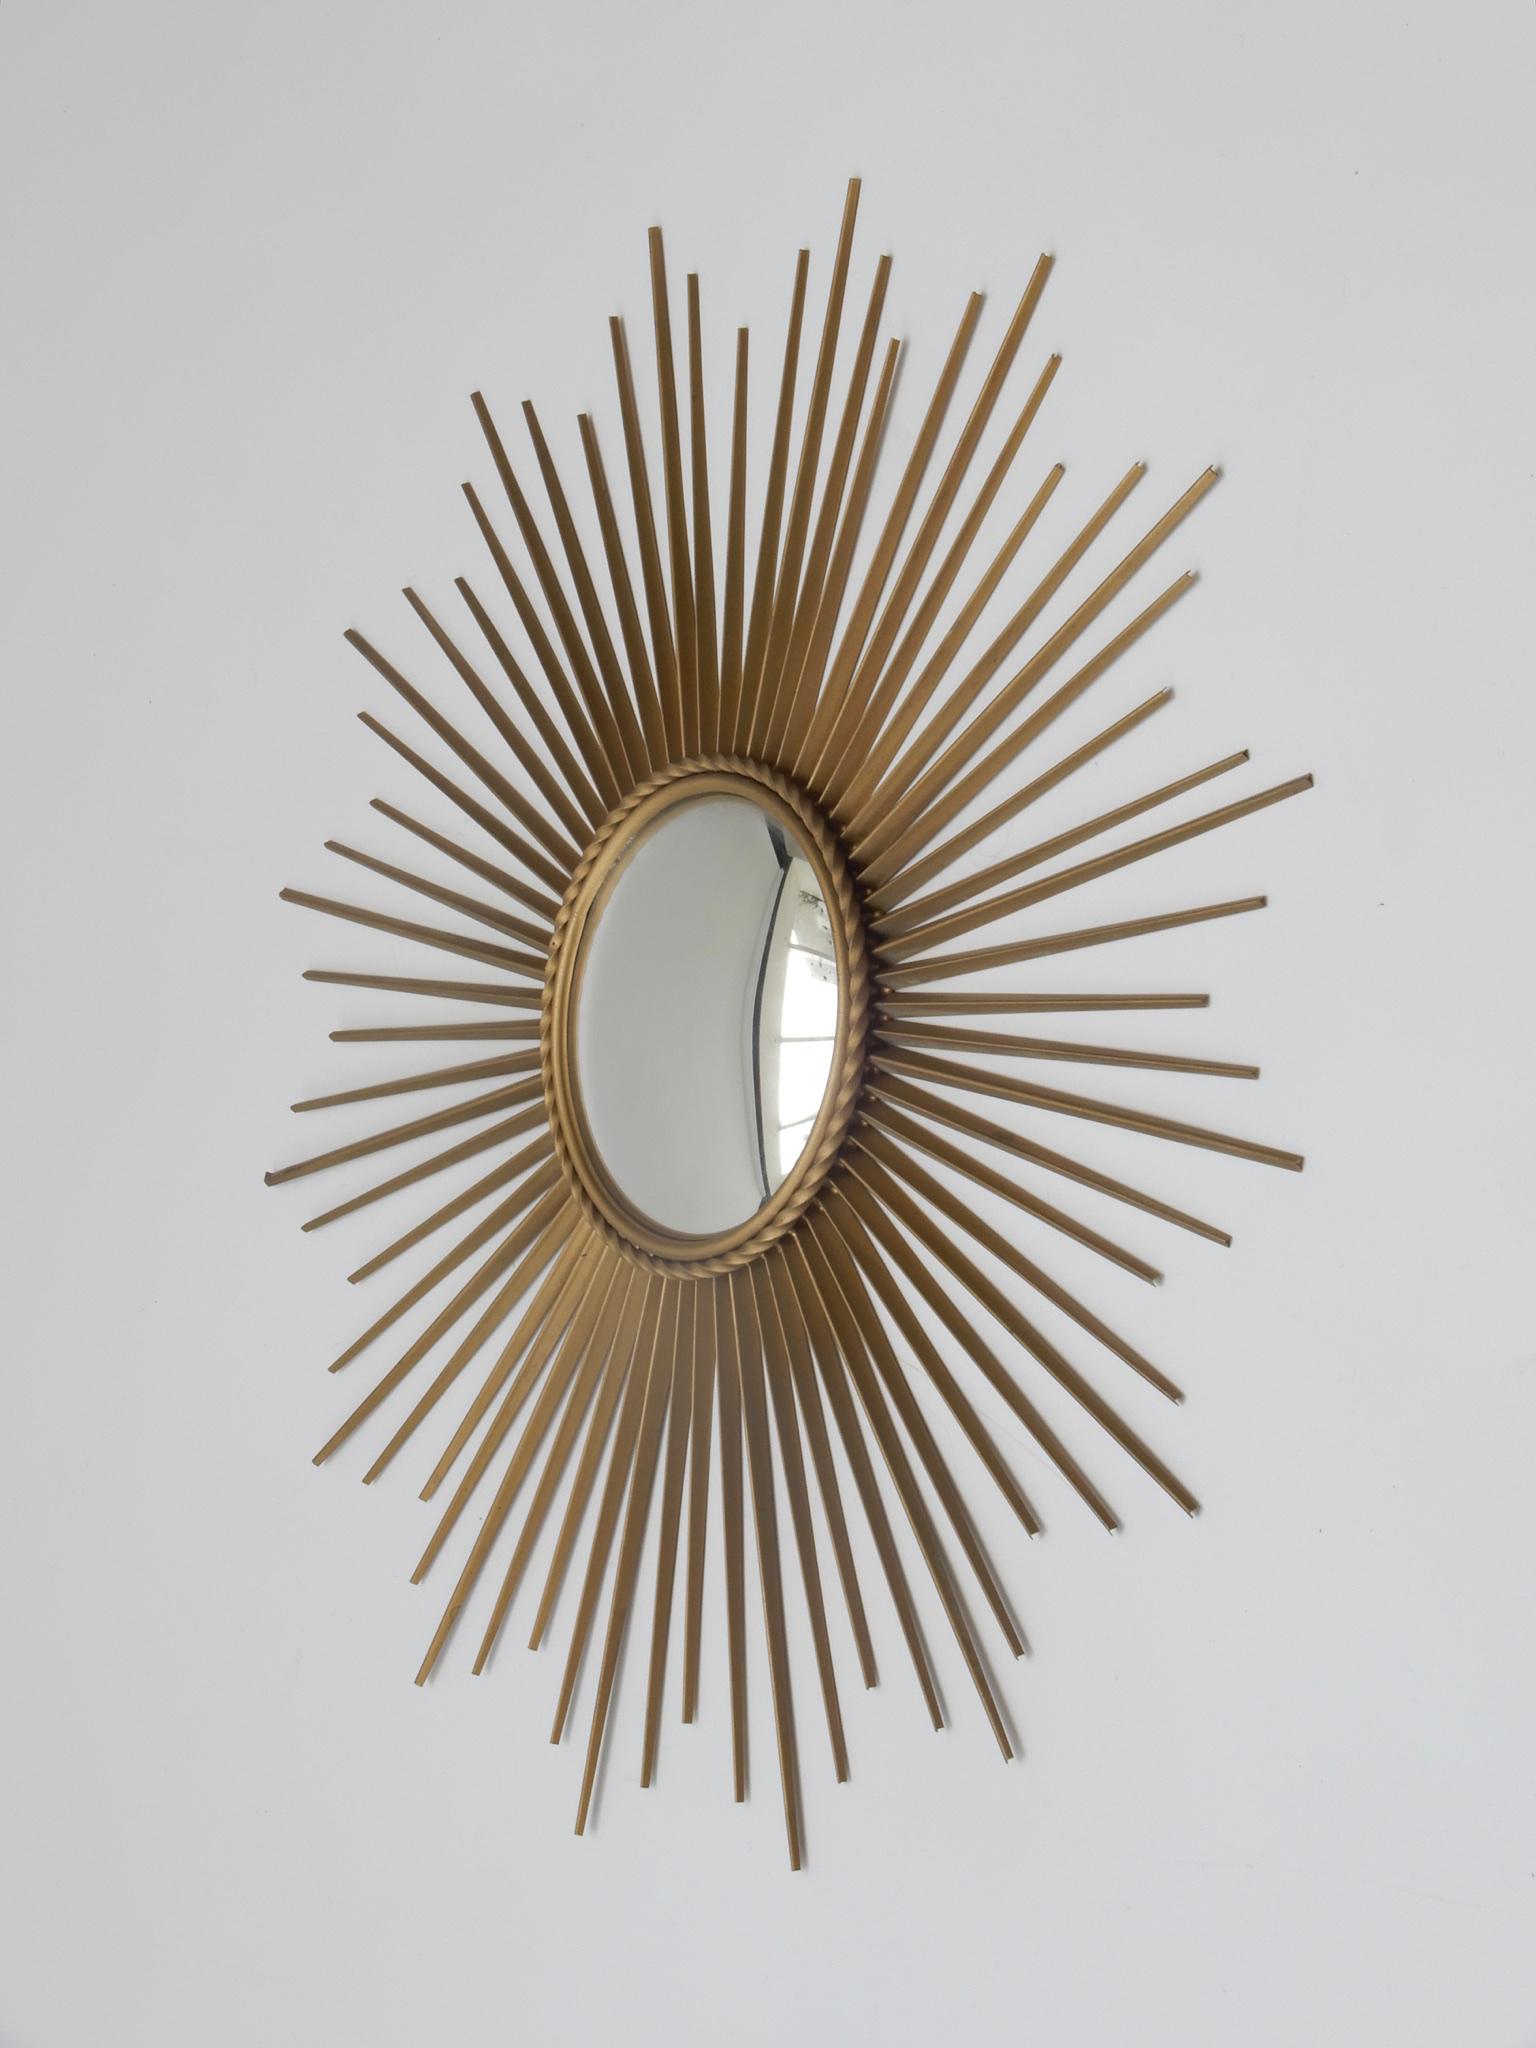 French Chaty Vallauris sunburst mirror, 1960s.